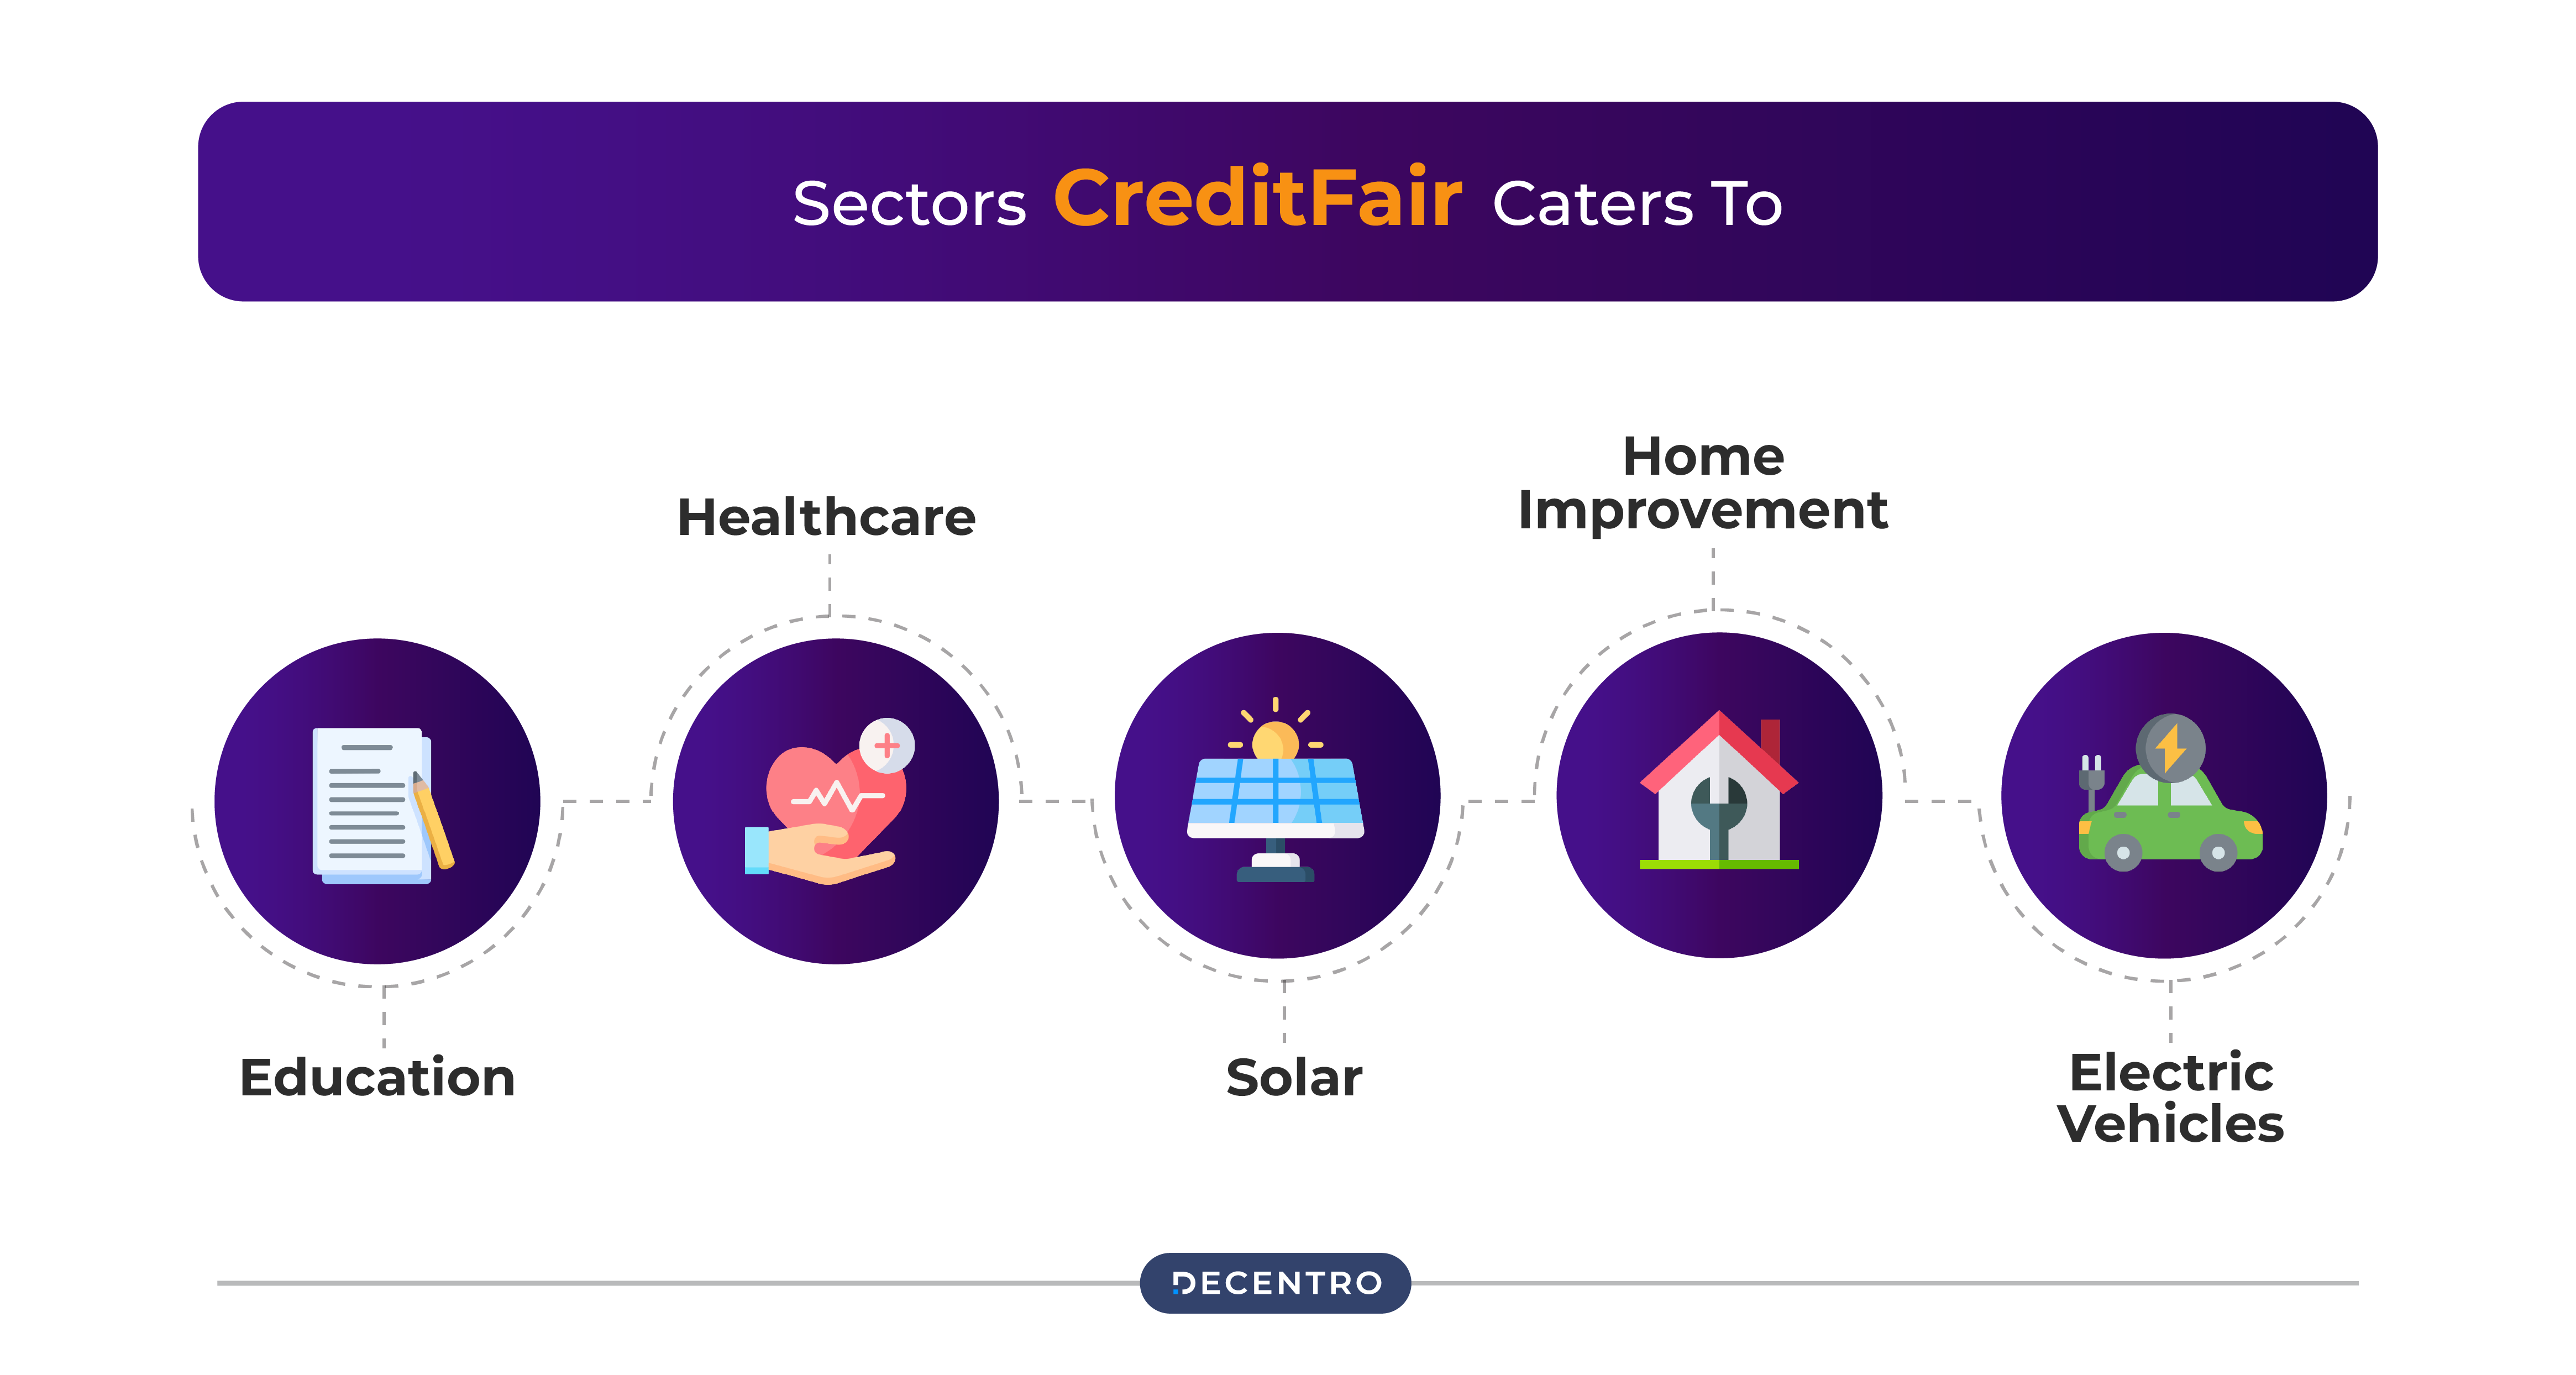 Sectors CreditFair caters to